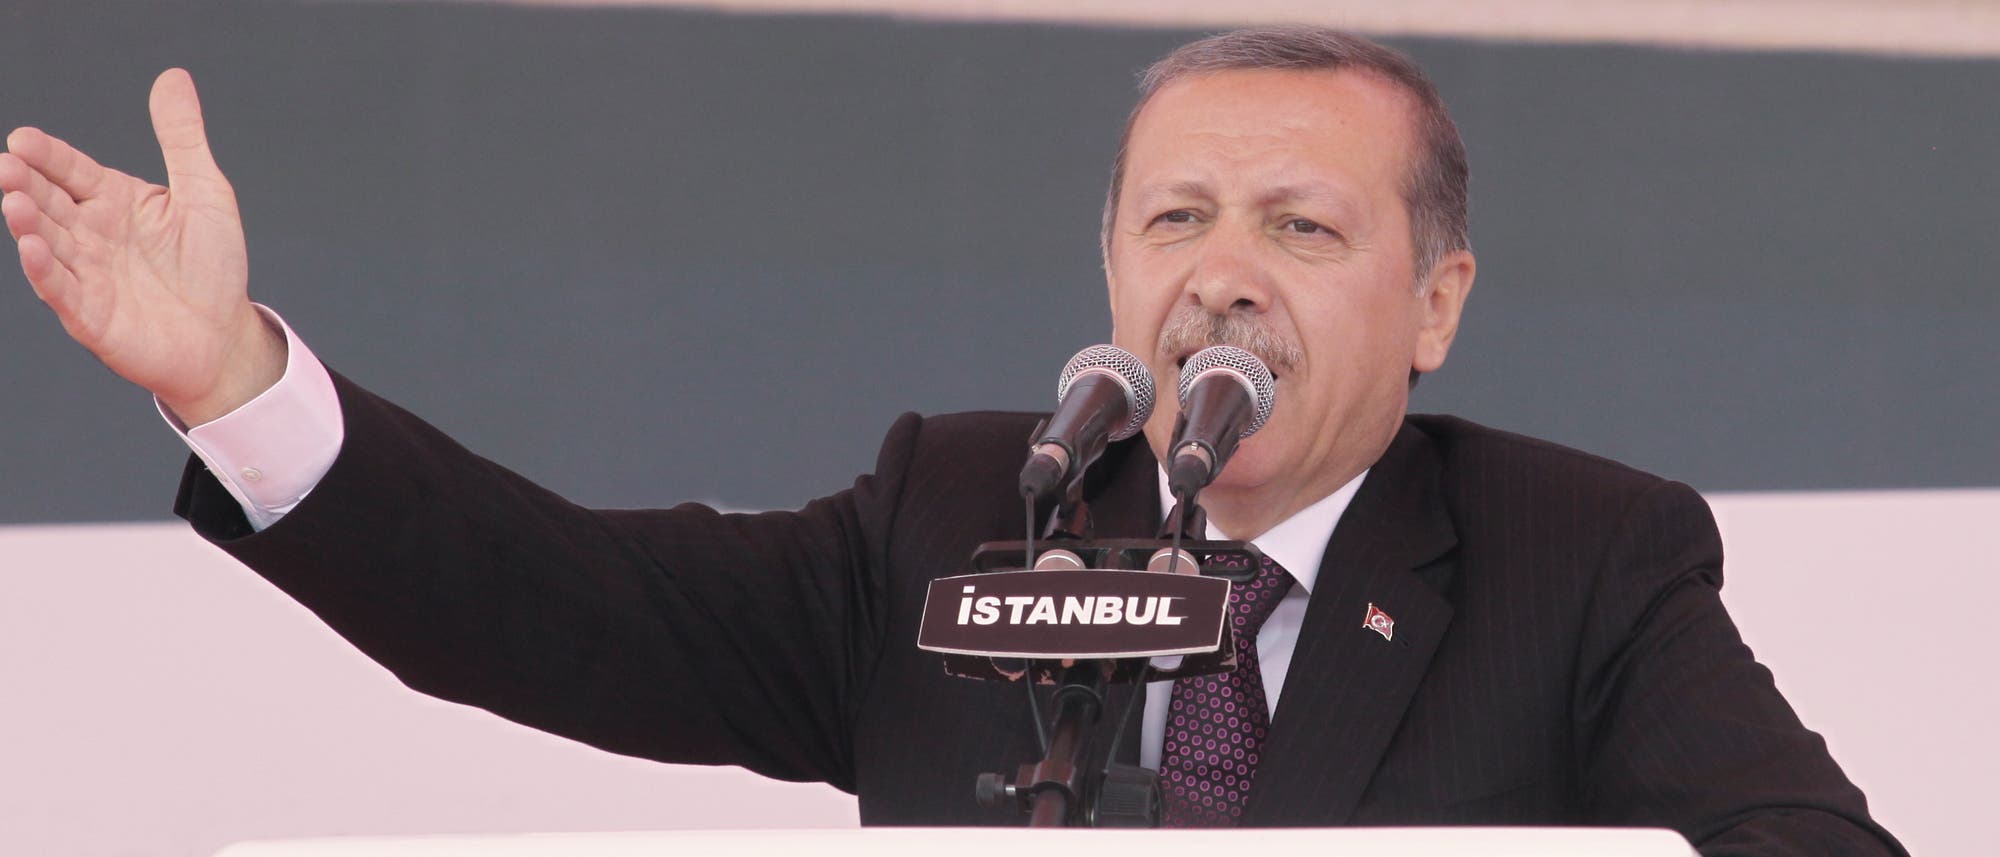 Recep Tayyip Erdogan quer